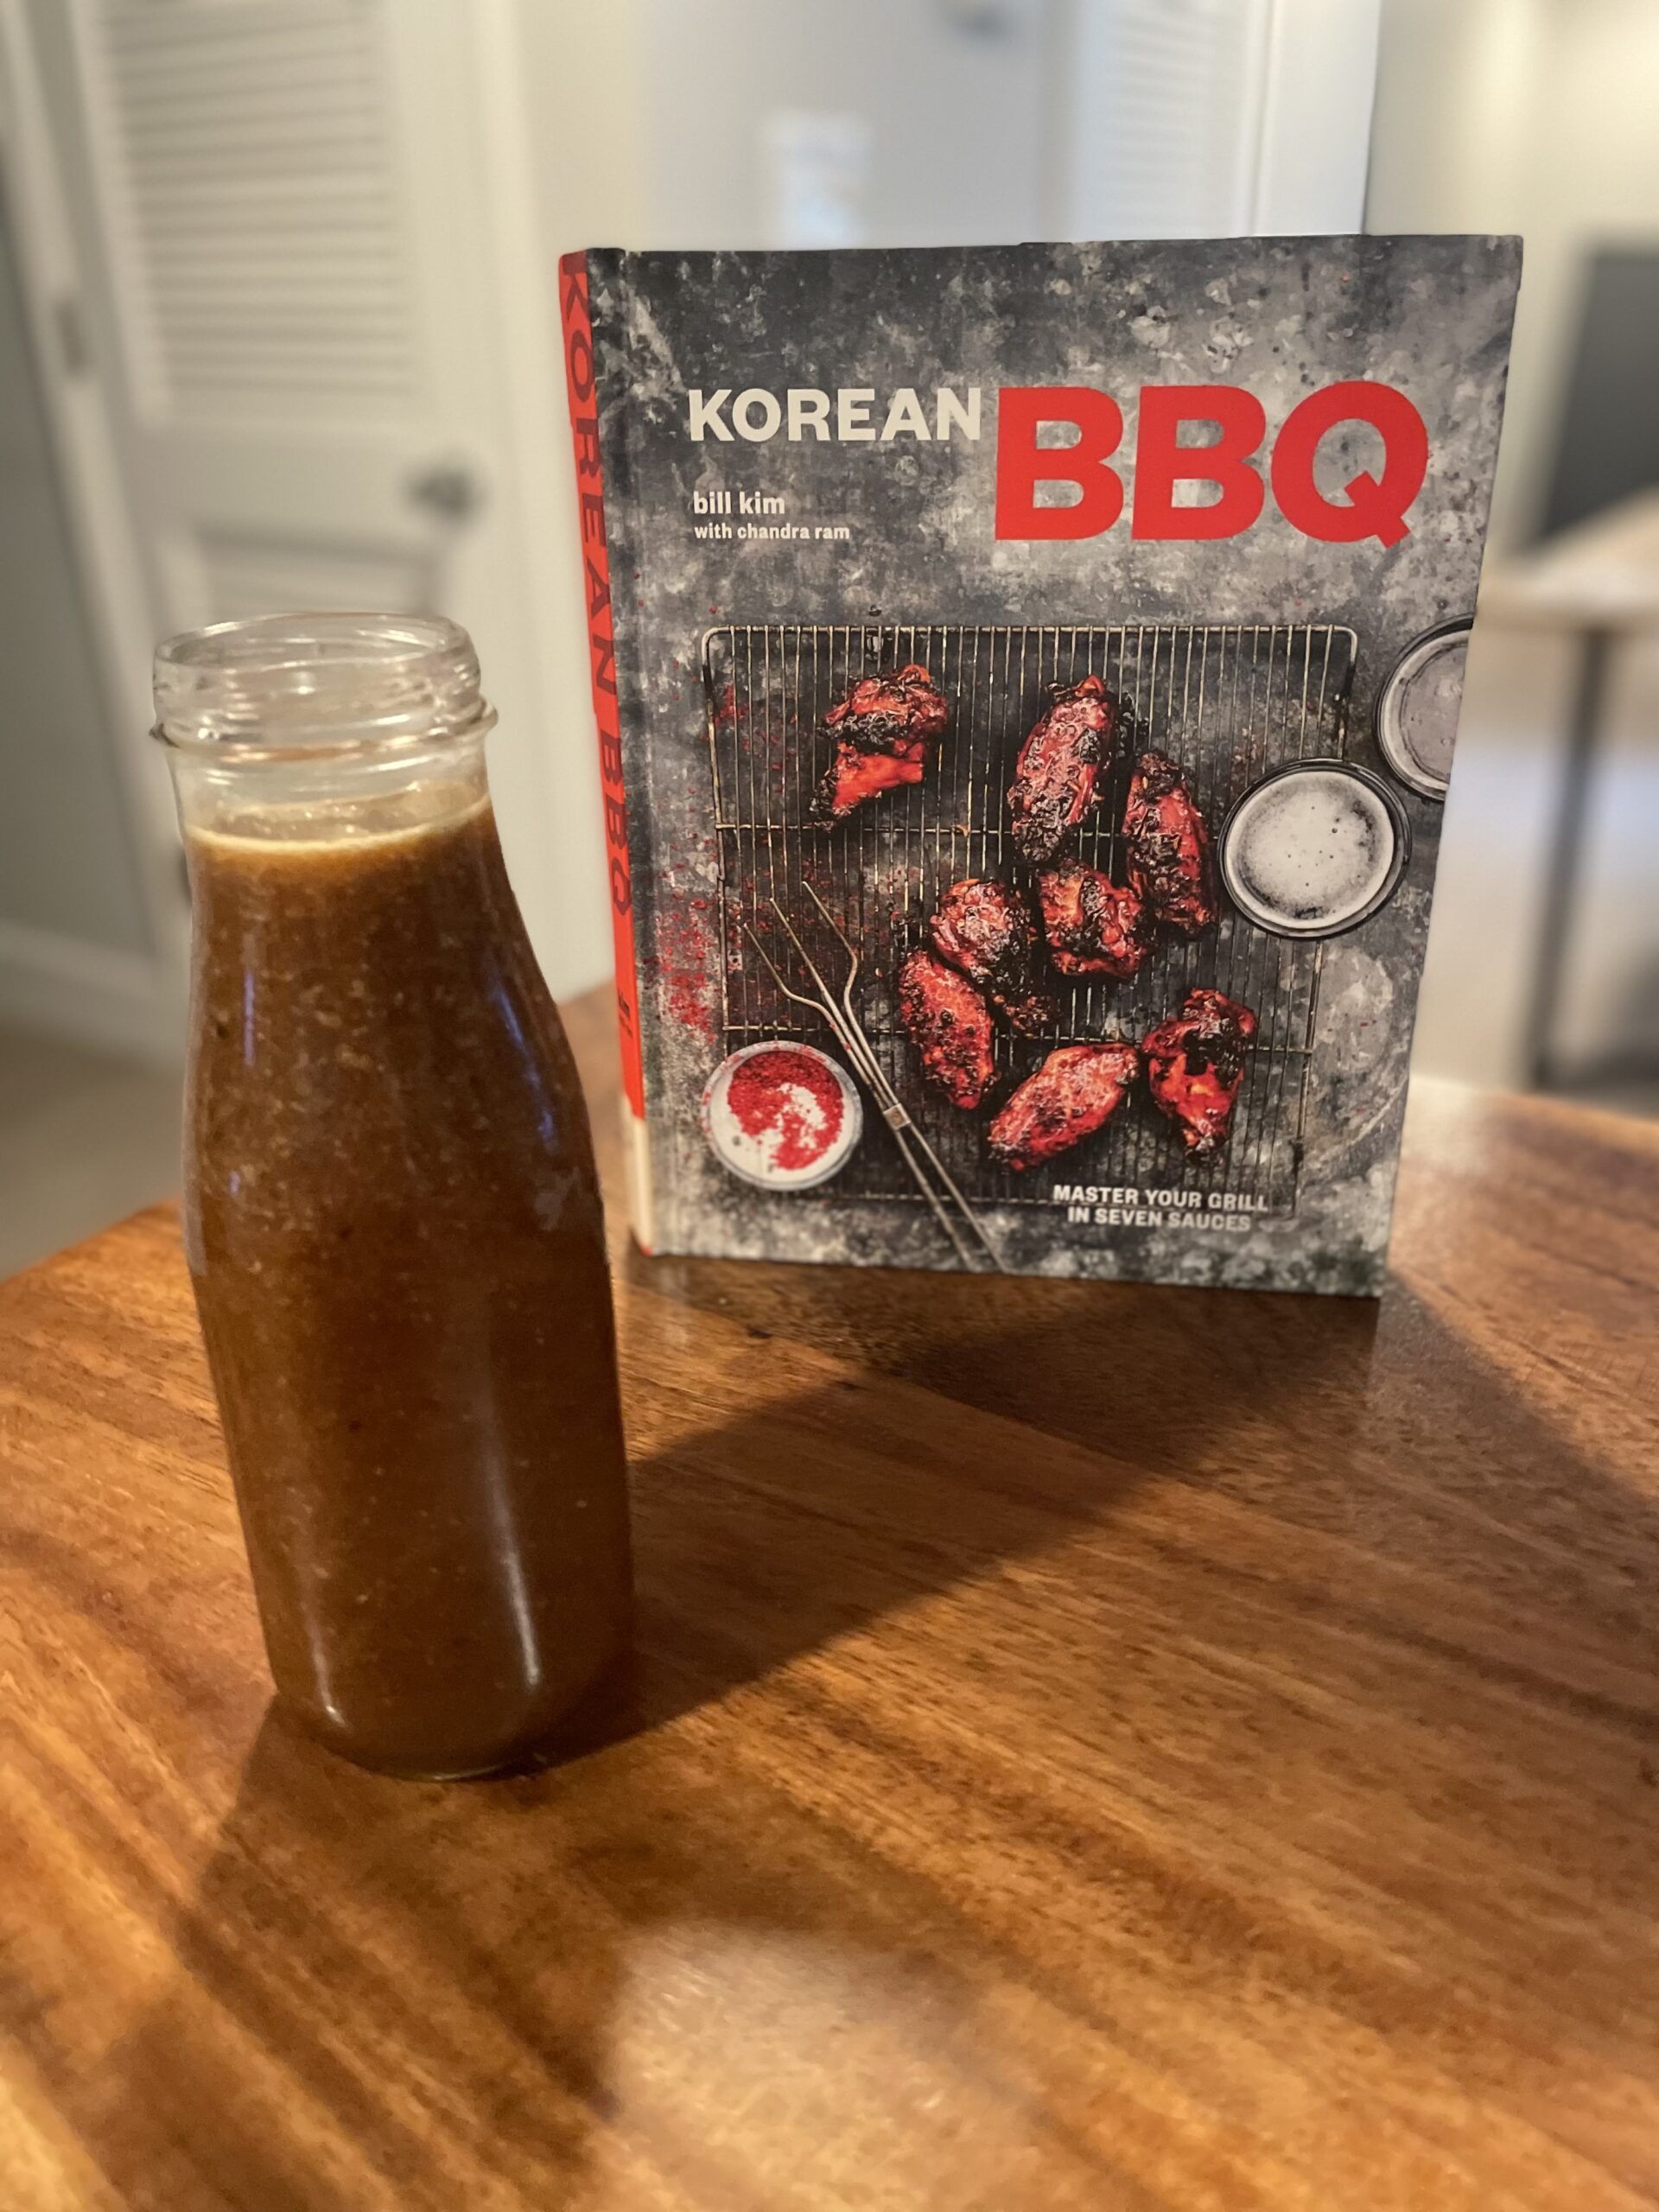 Image of Korean BBQ cookbook next to a tall glass jar of a light brownish BBQ sauce